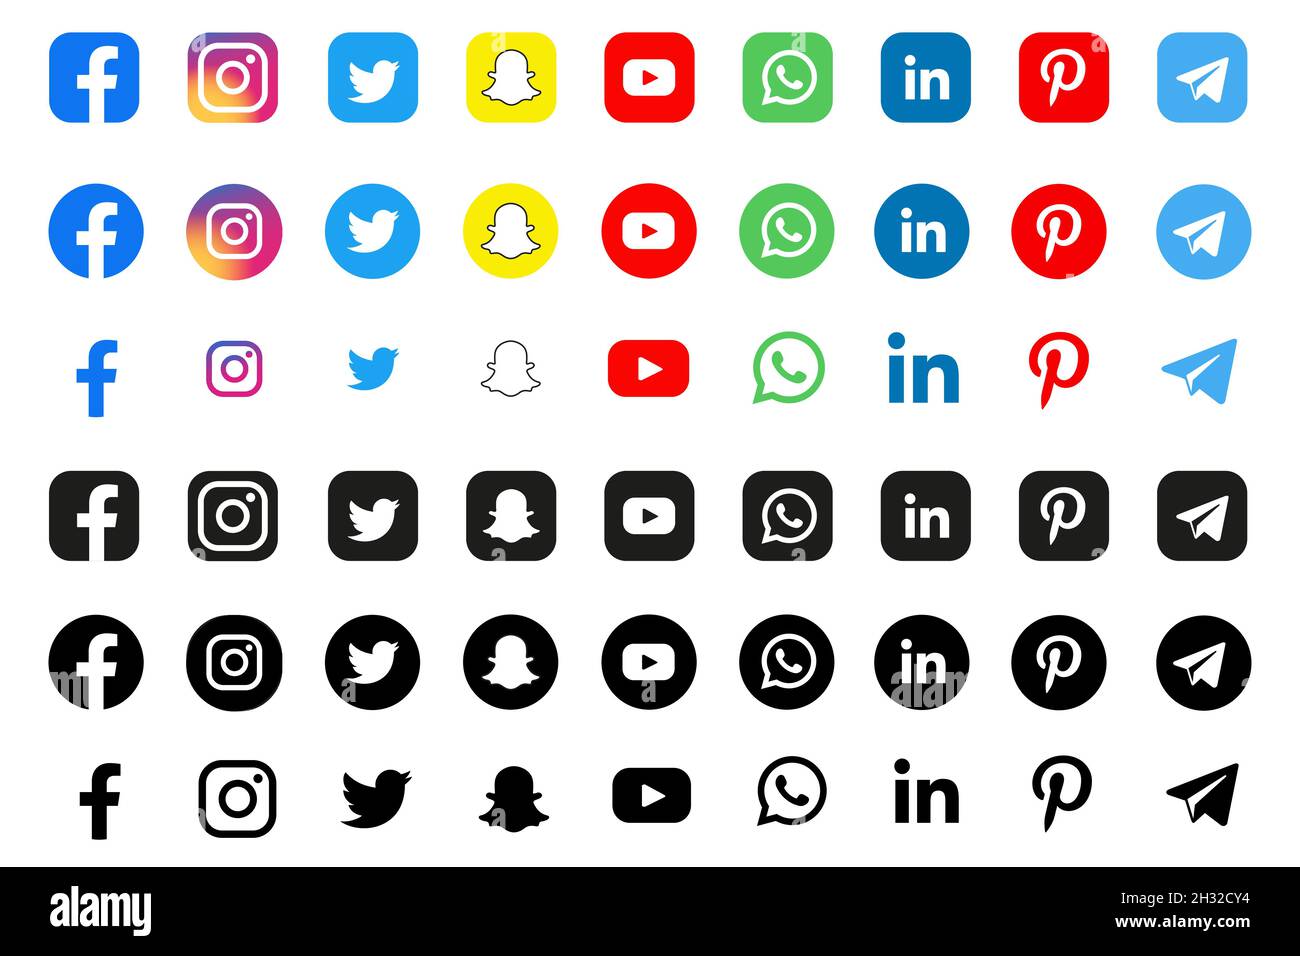 Facebook, twitter, instagram, youtube, snapchat, pinterest, whatsap, linkedin, periscope, vimeo - Collection of popular social media logo.  Stock Vector